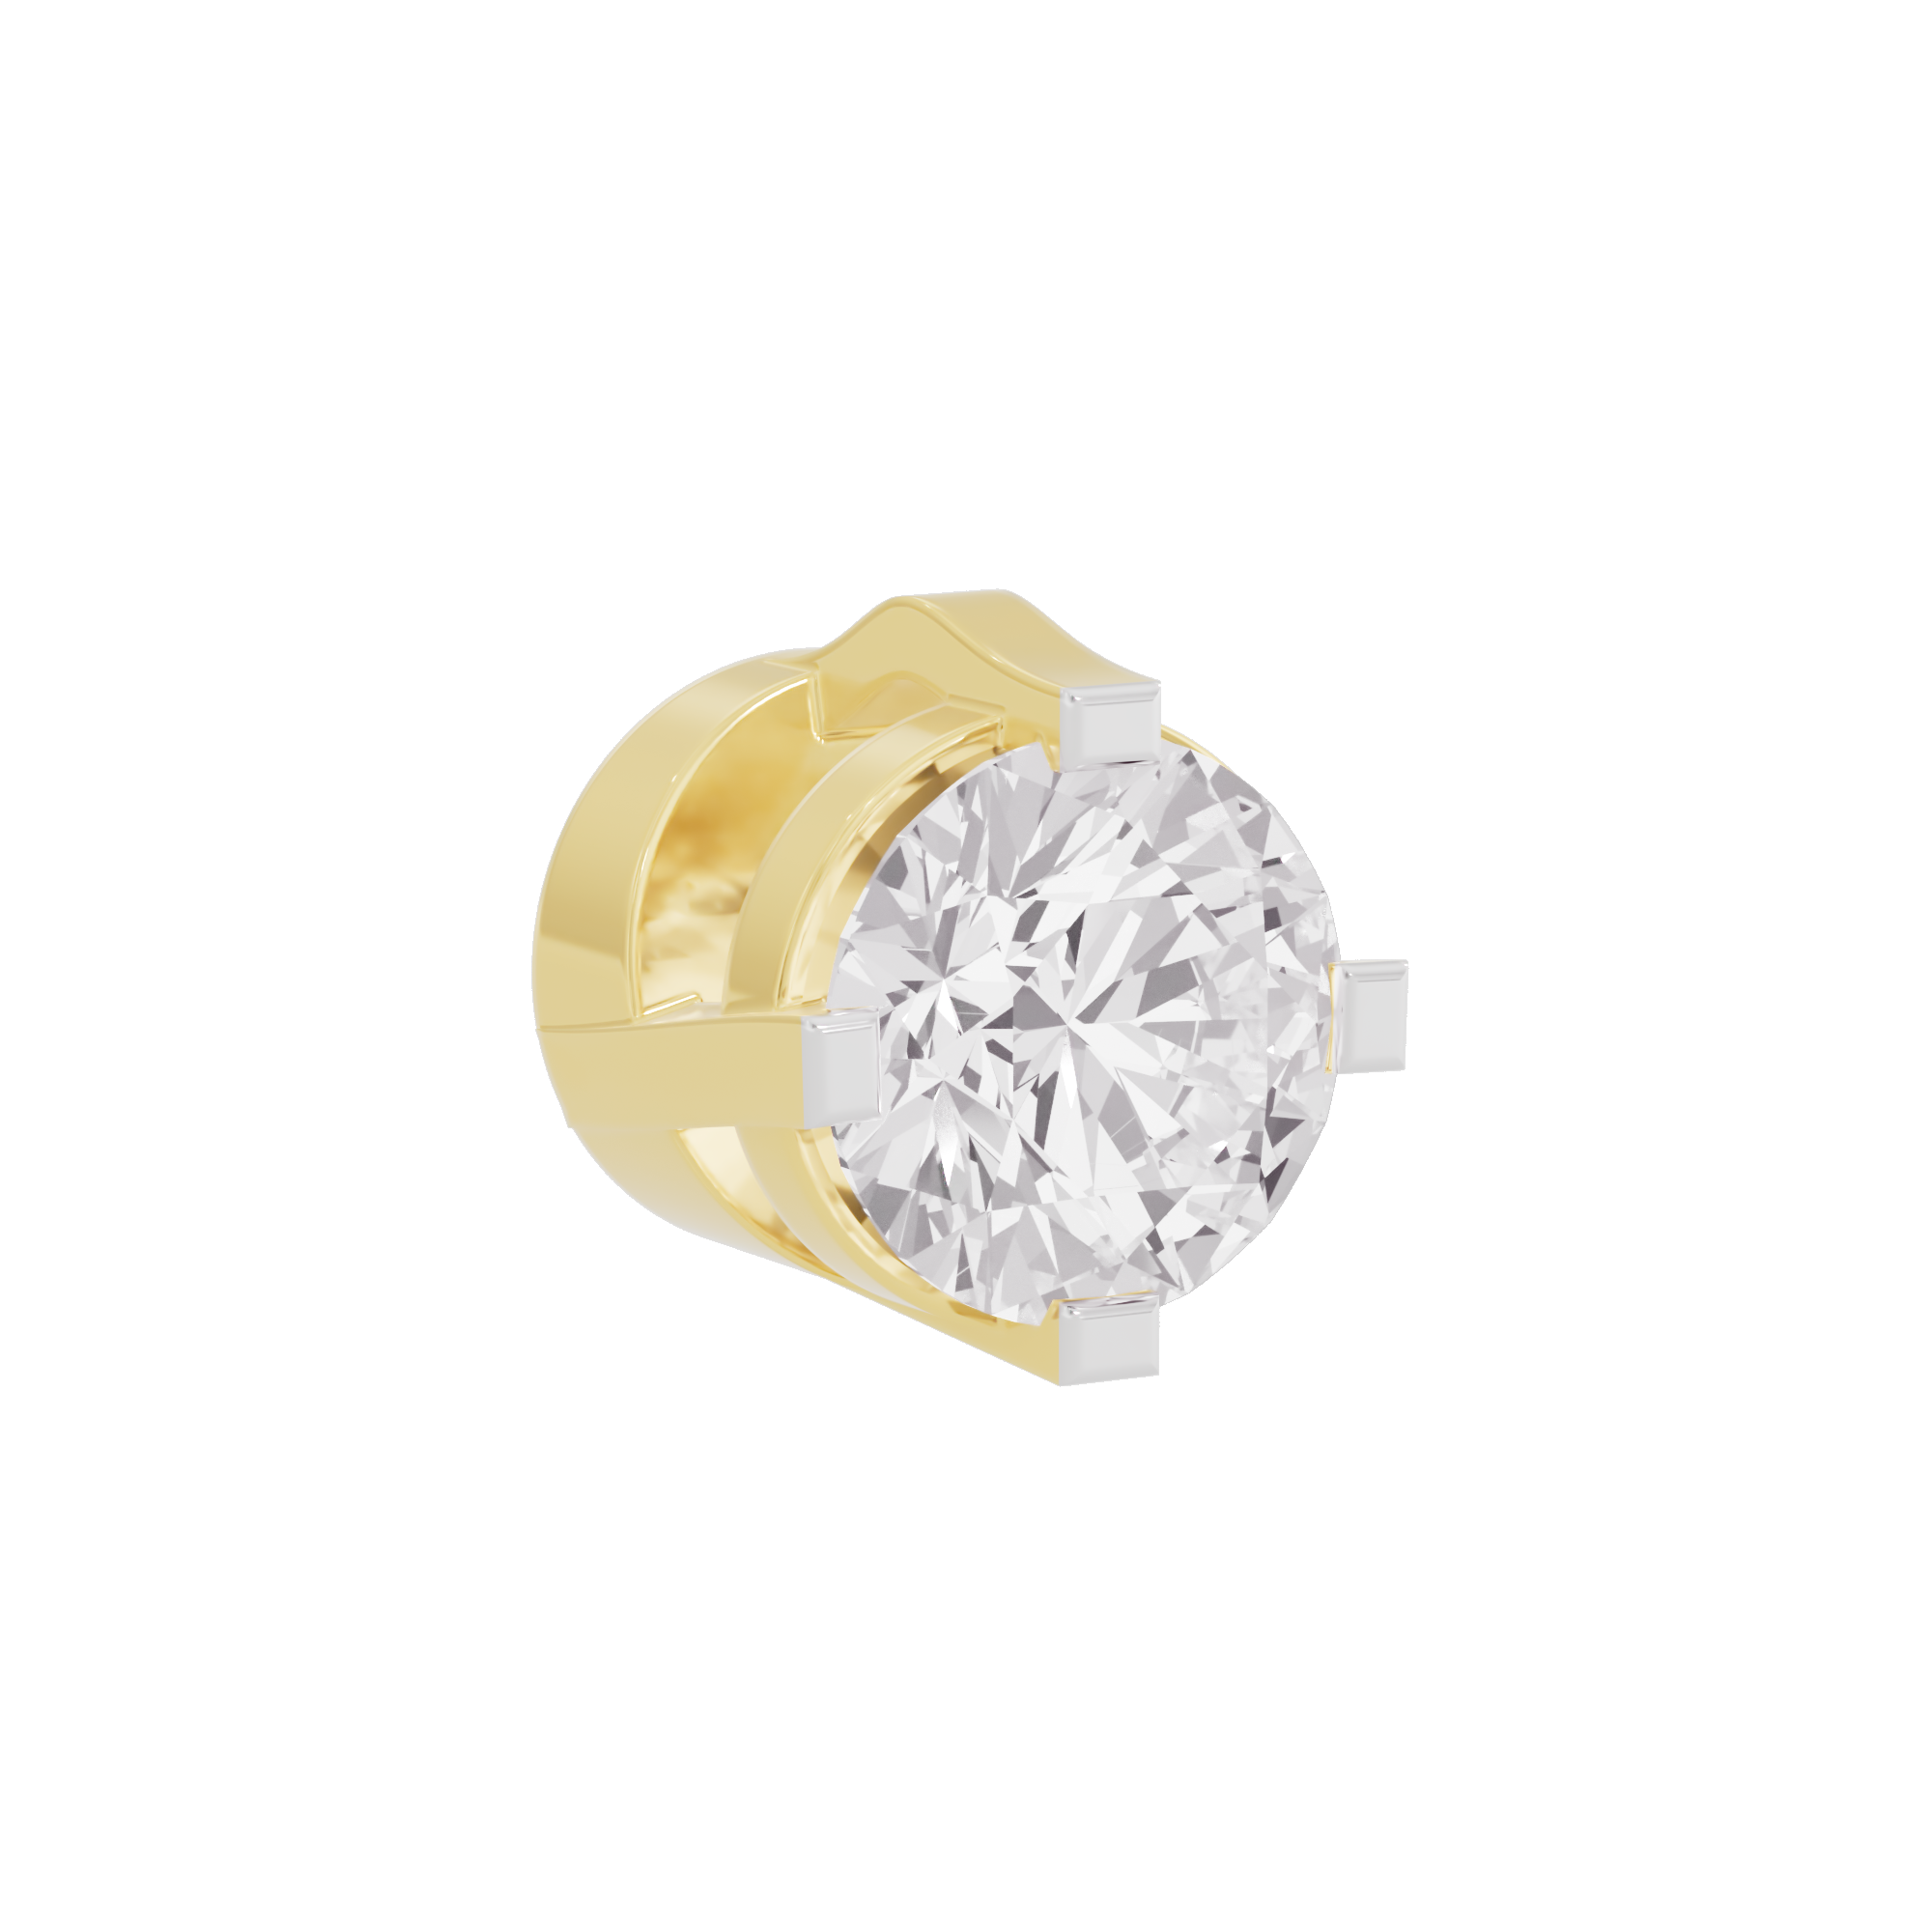 Regal Radiance Diamond Pendant